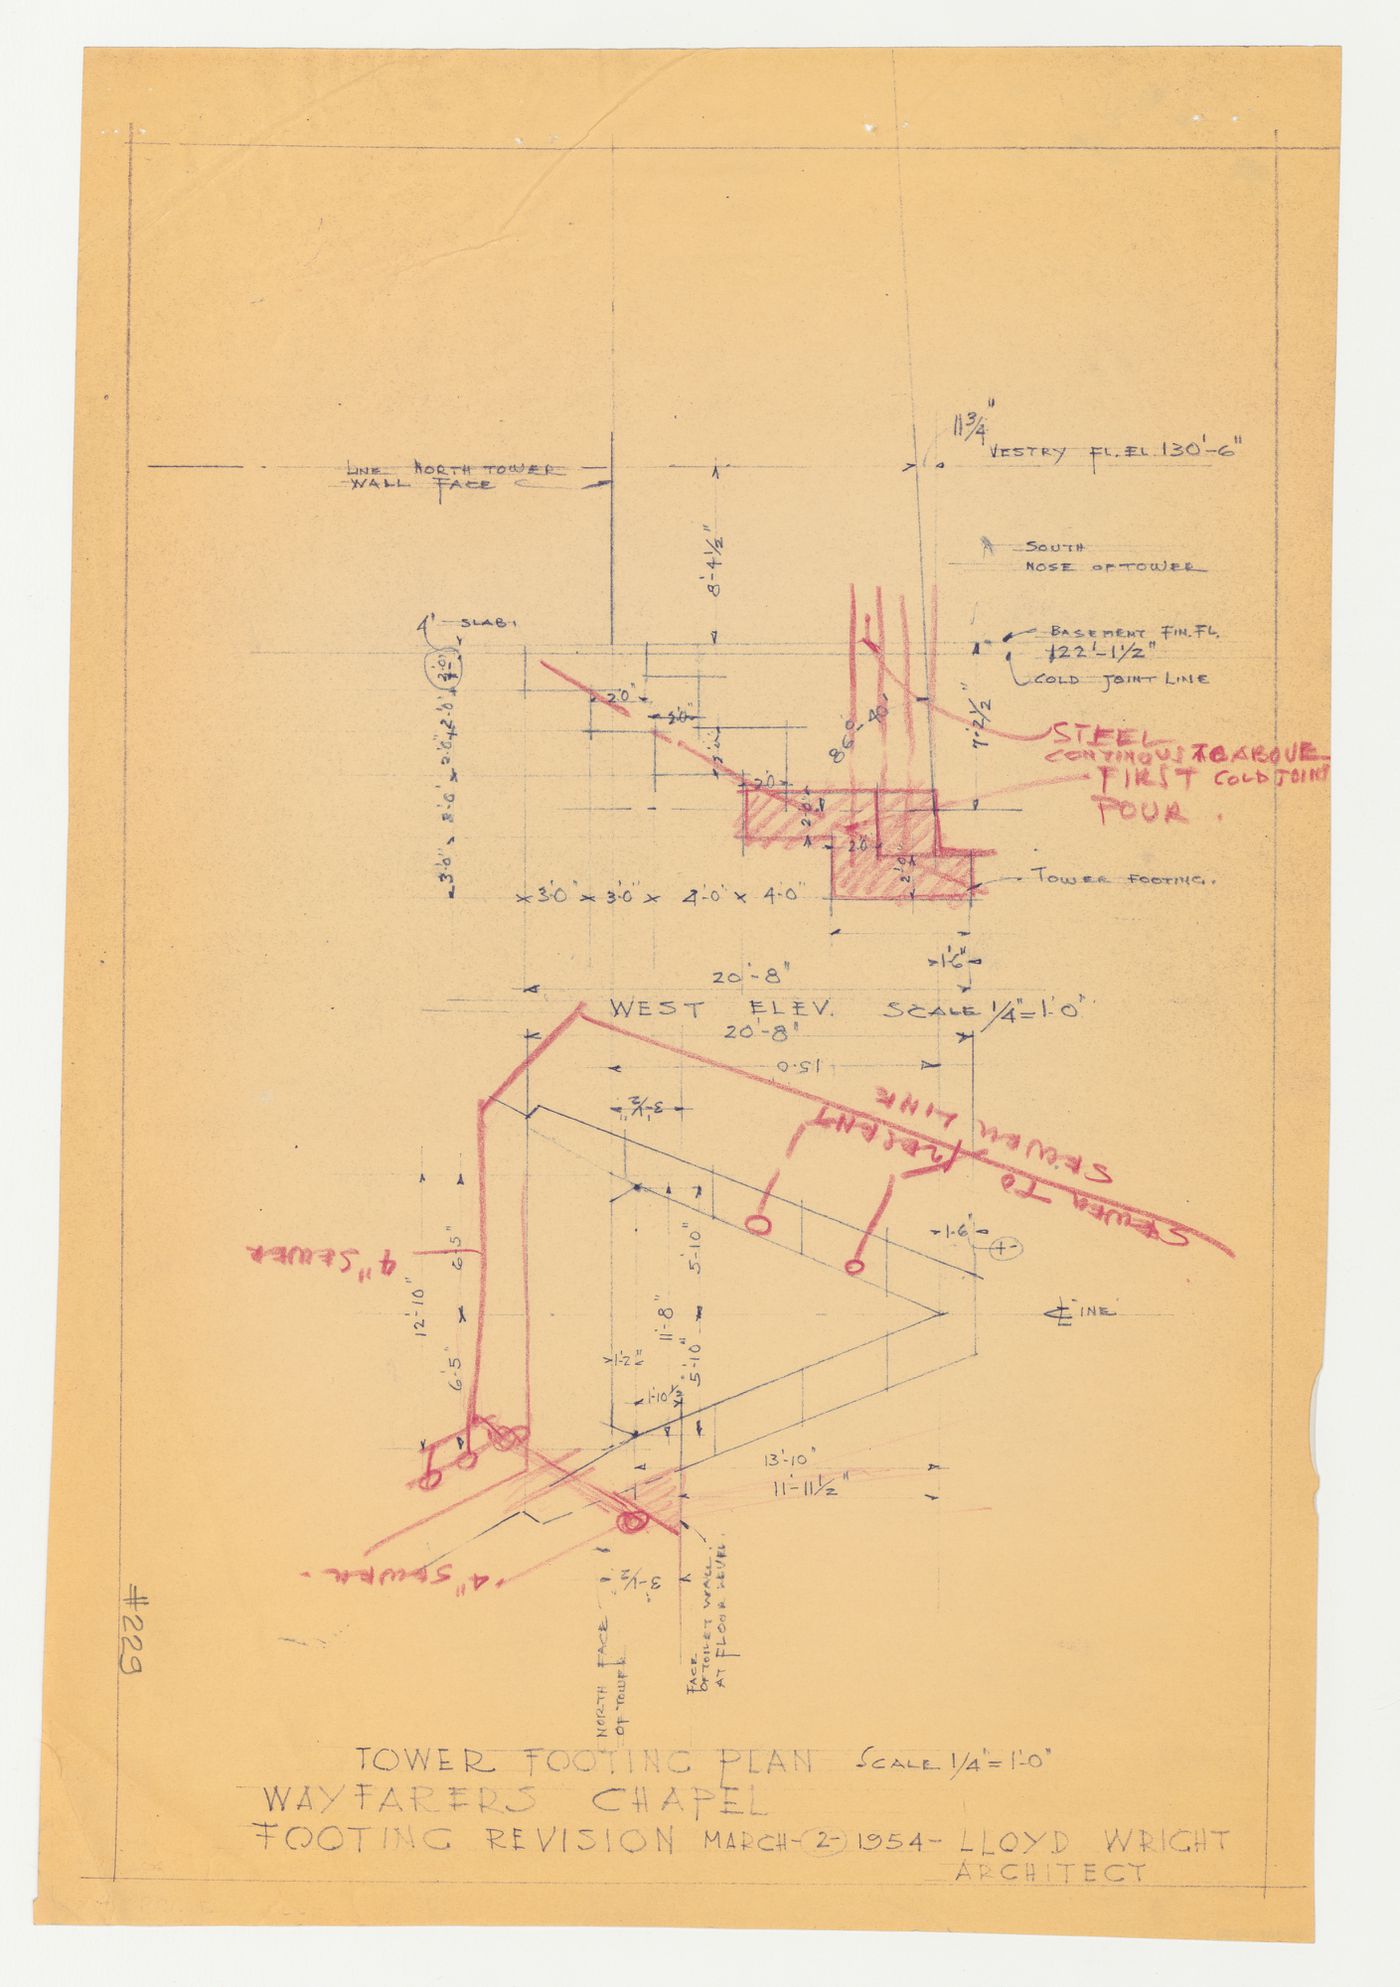 Wayfarers' Chapel, Palos Verdes, California: Plan and elevation for campanile footings